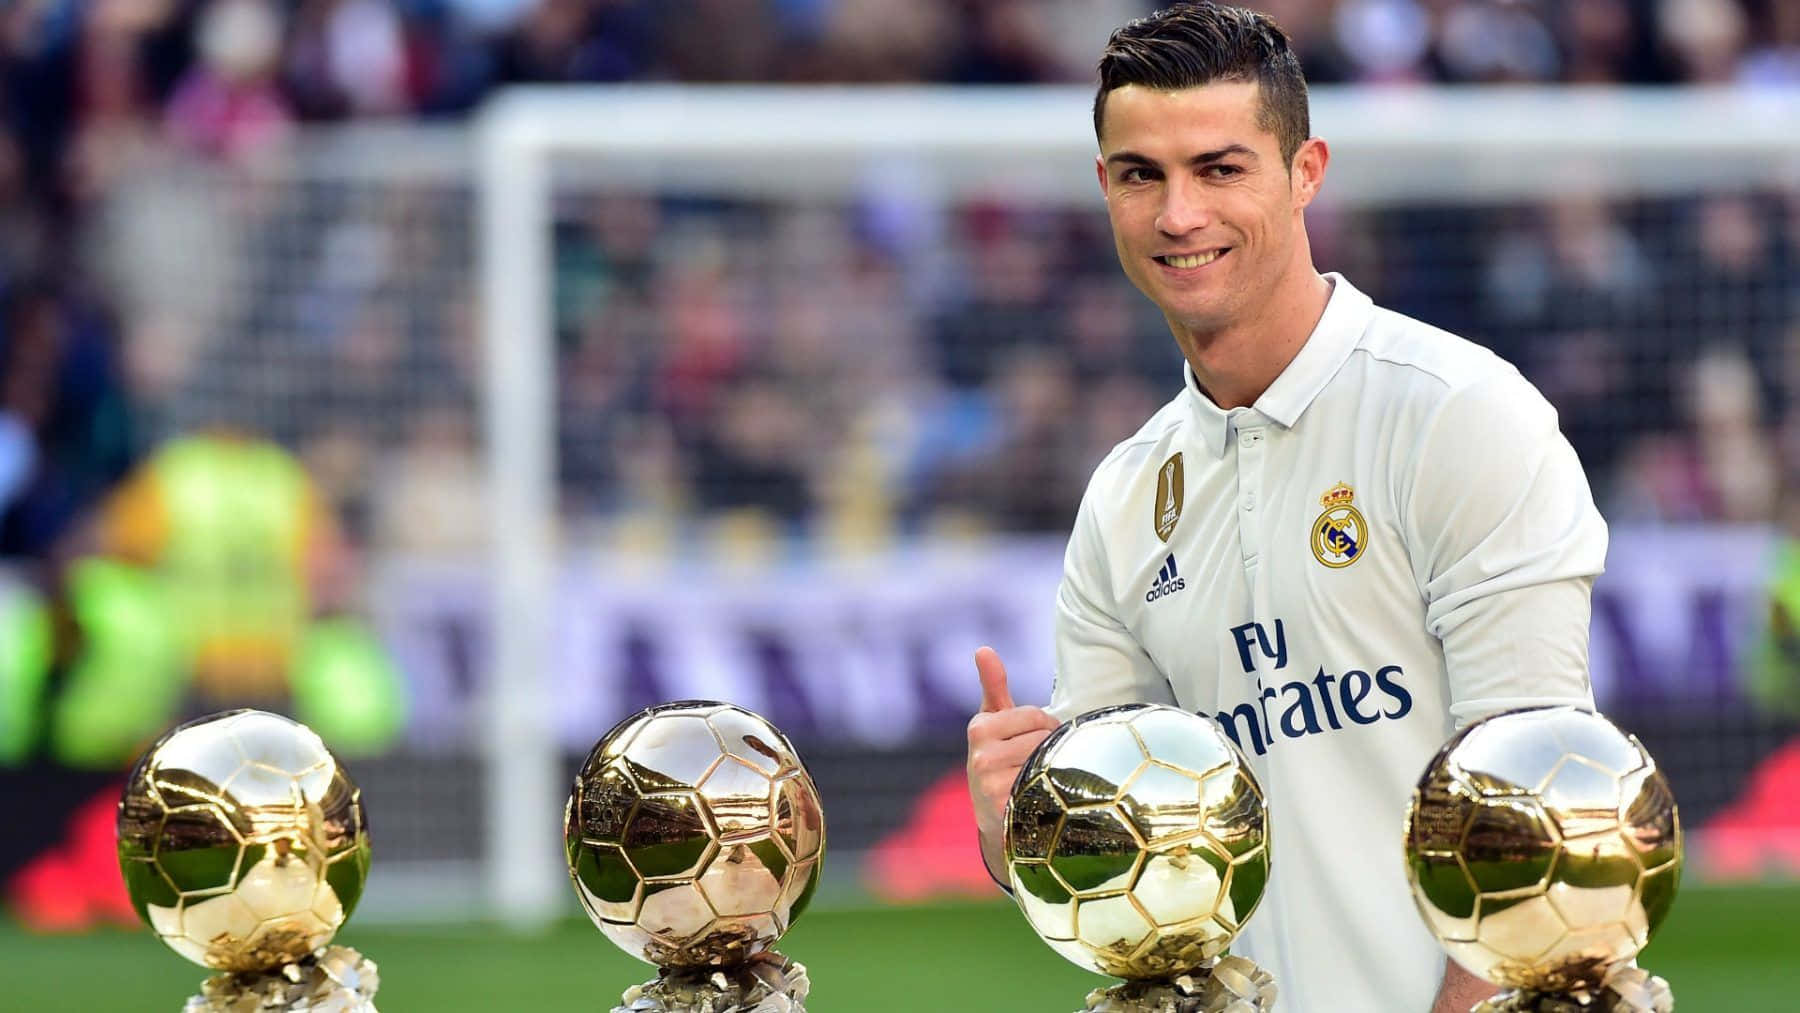 Soccer Superstar - Cristiano Ronaldo